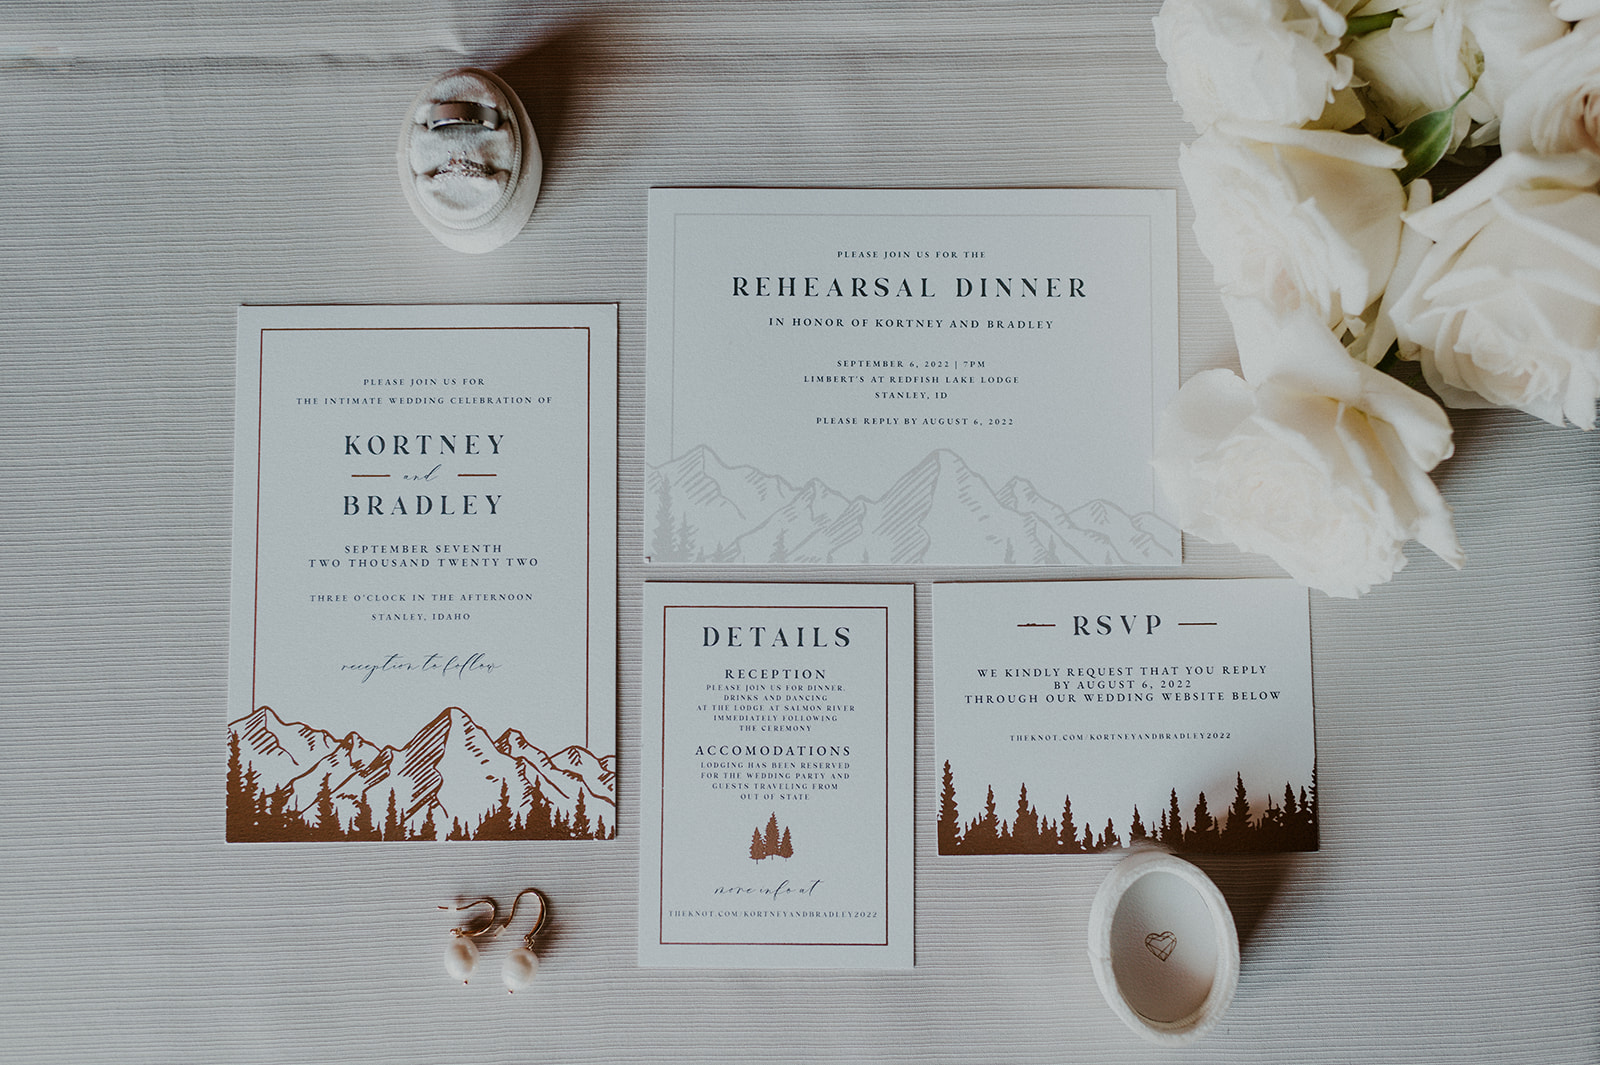 All white modern monochromatic wedding invitation details